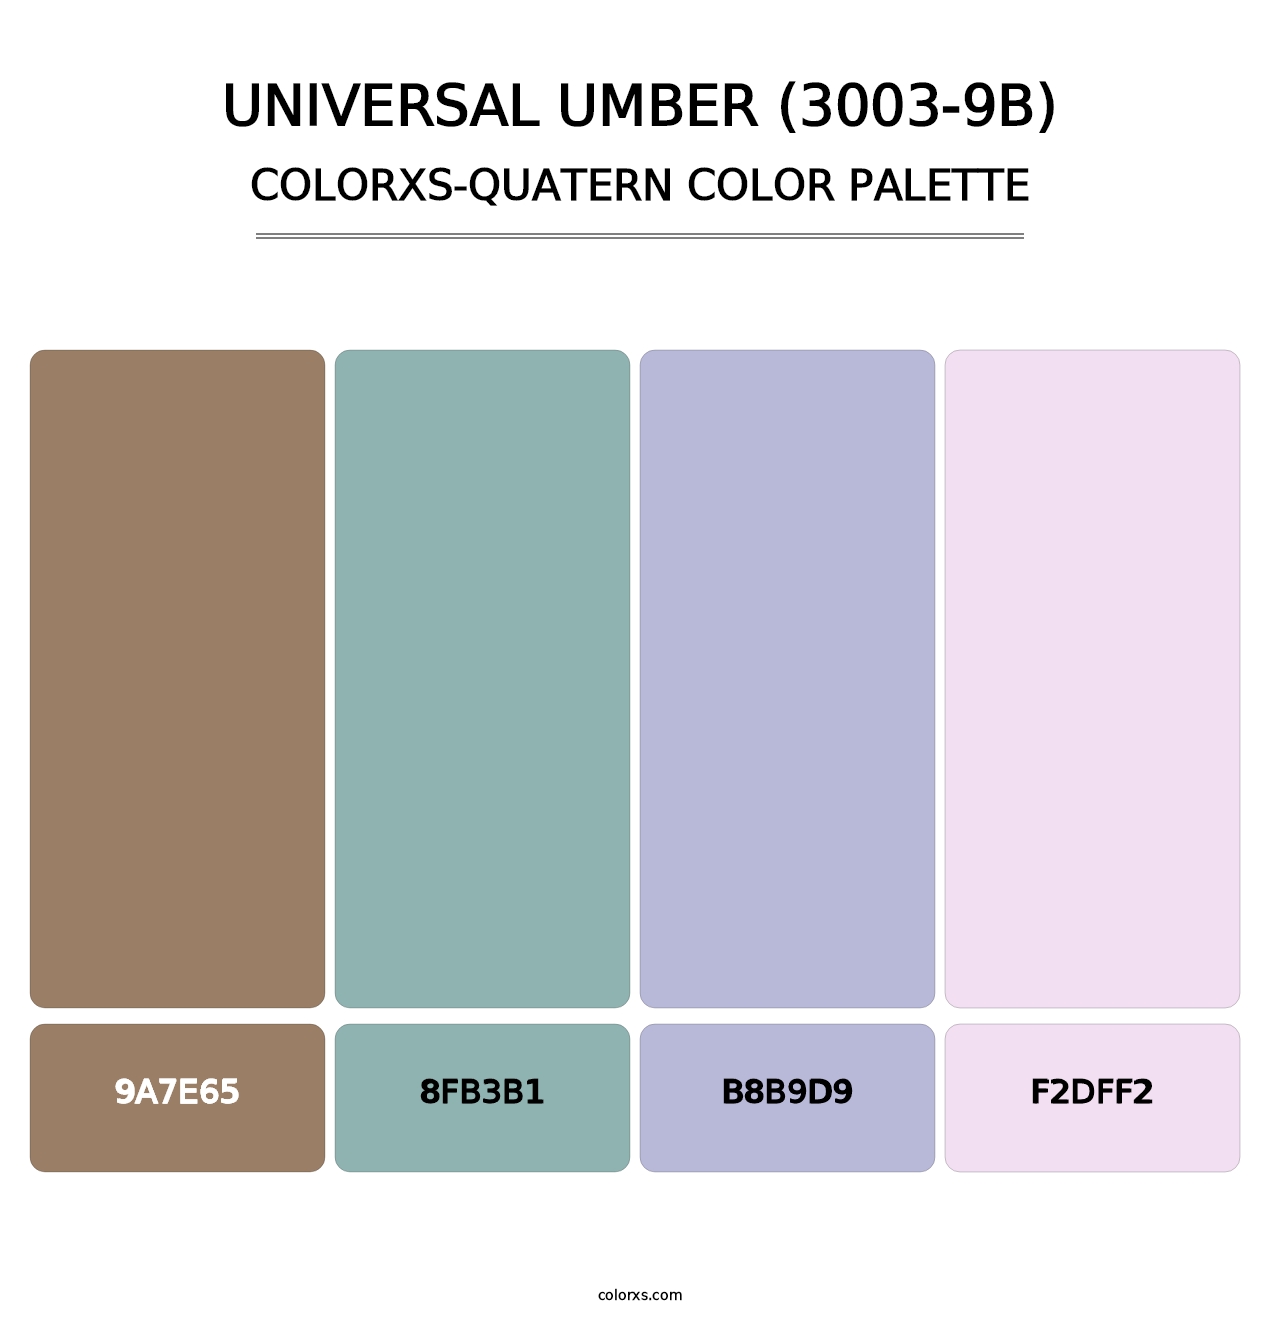 Universal Umber (3003-9B) - Colorxs Quatern Palette